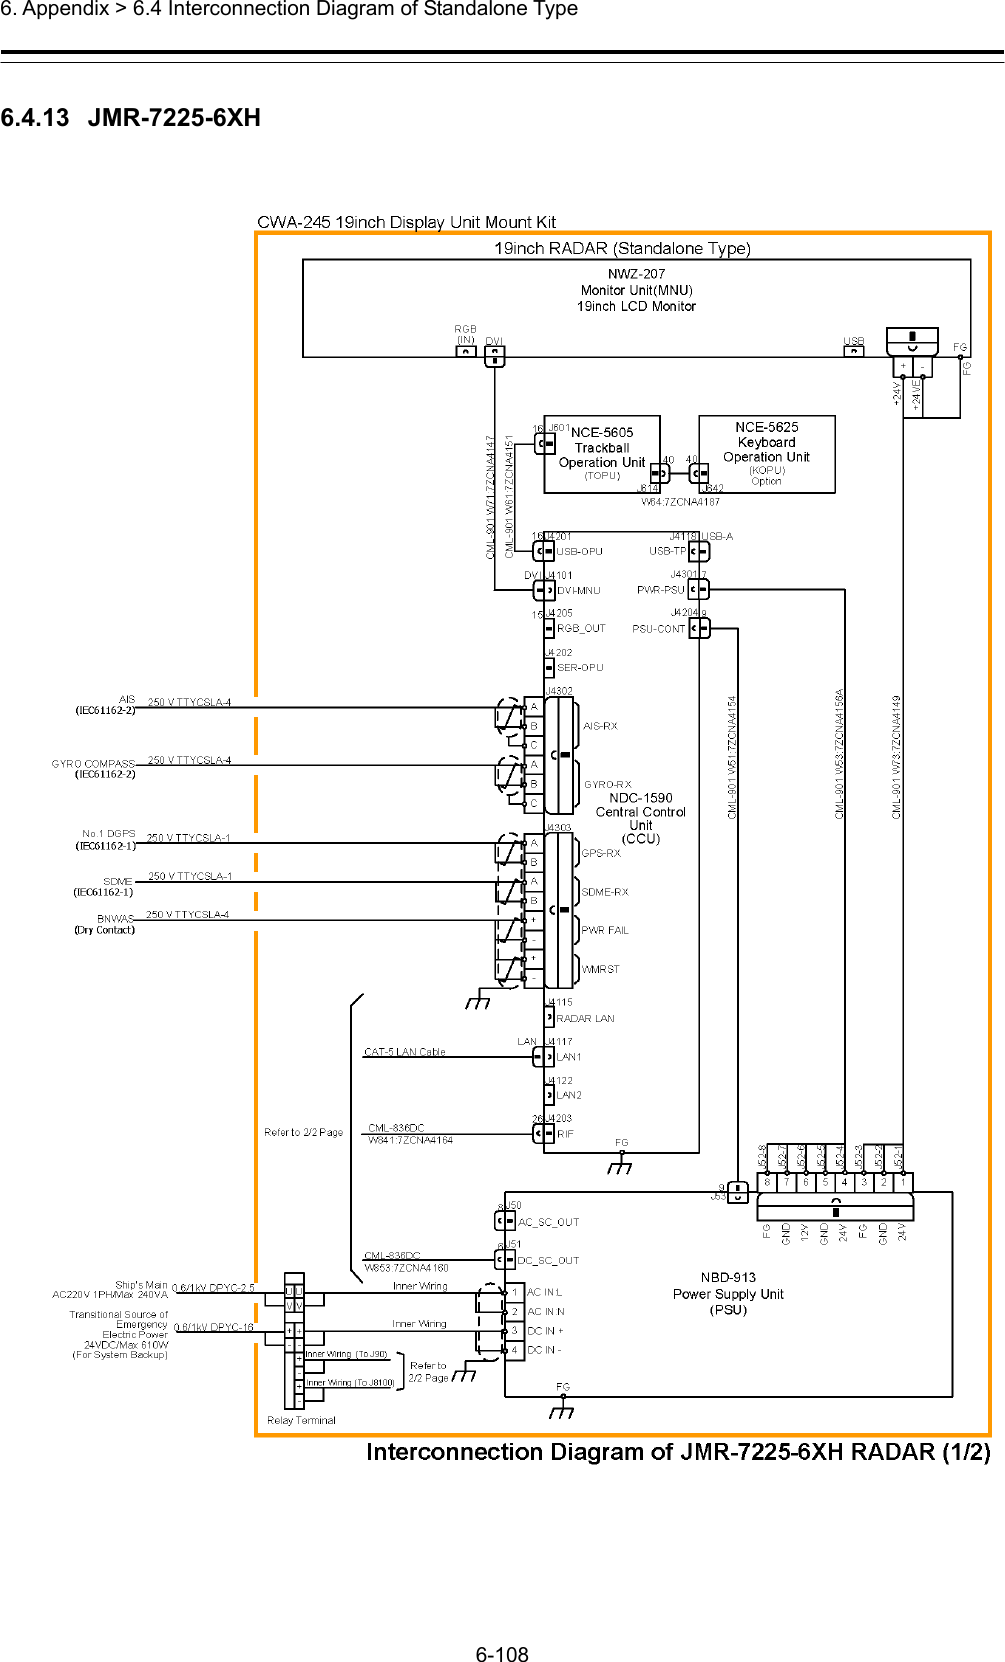  6. Appendix &gt; 6.4 Interconnection Diagram of Standalone Type 6-108  6.4.13  JMR-7225-6XH 